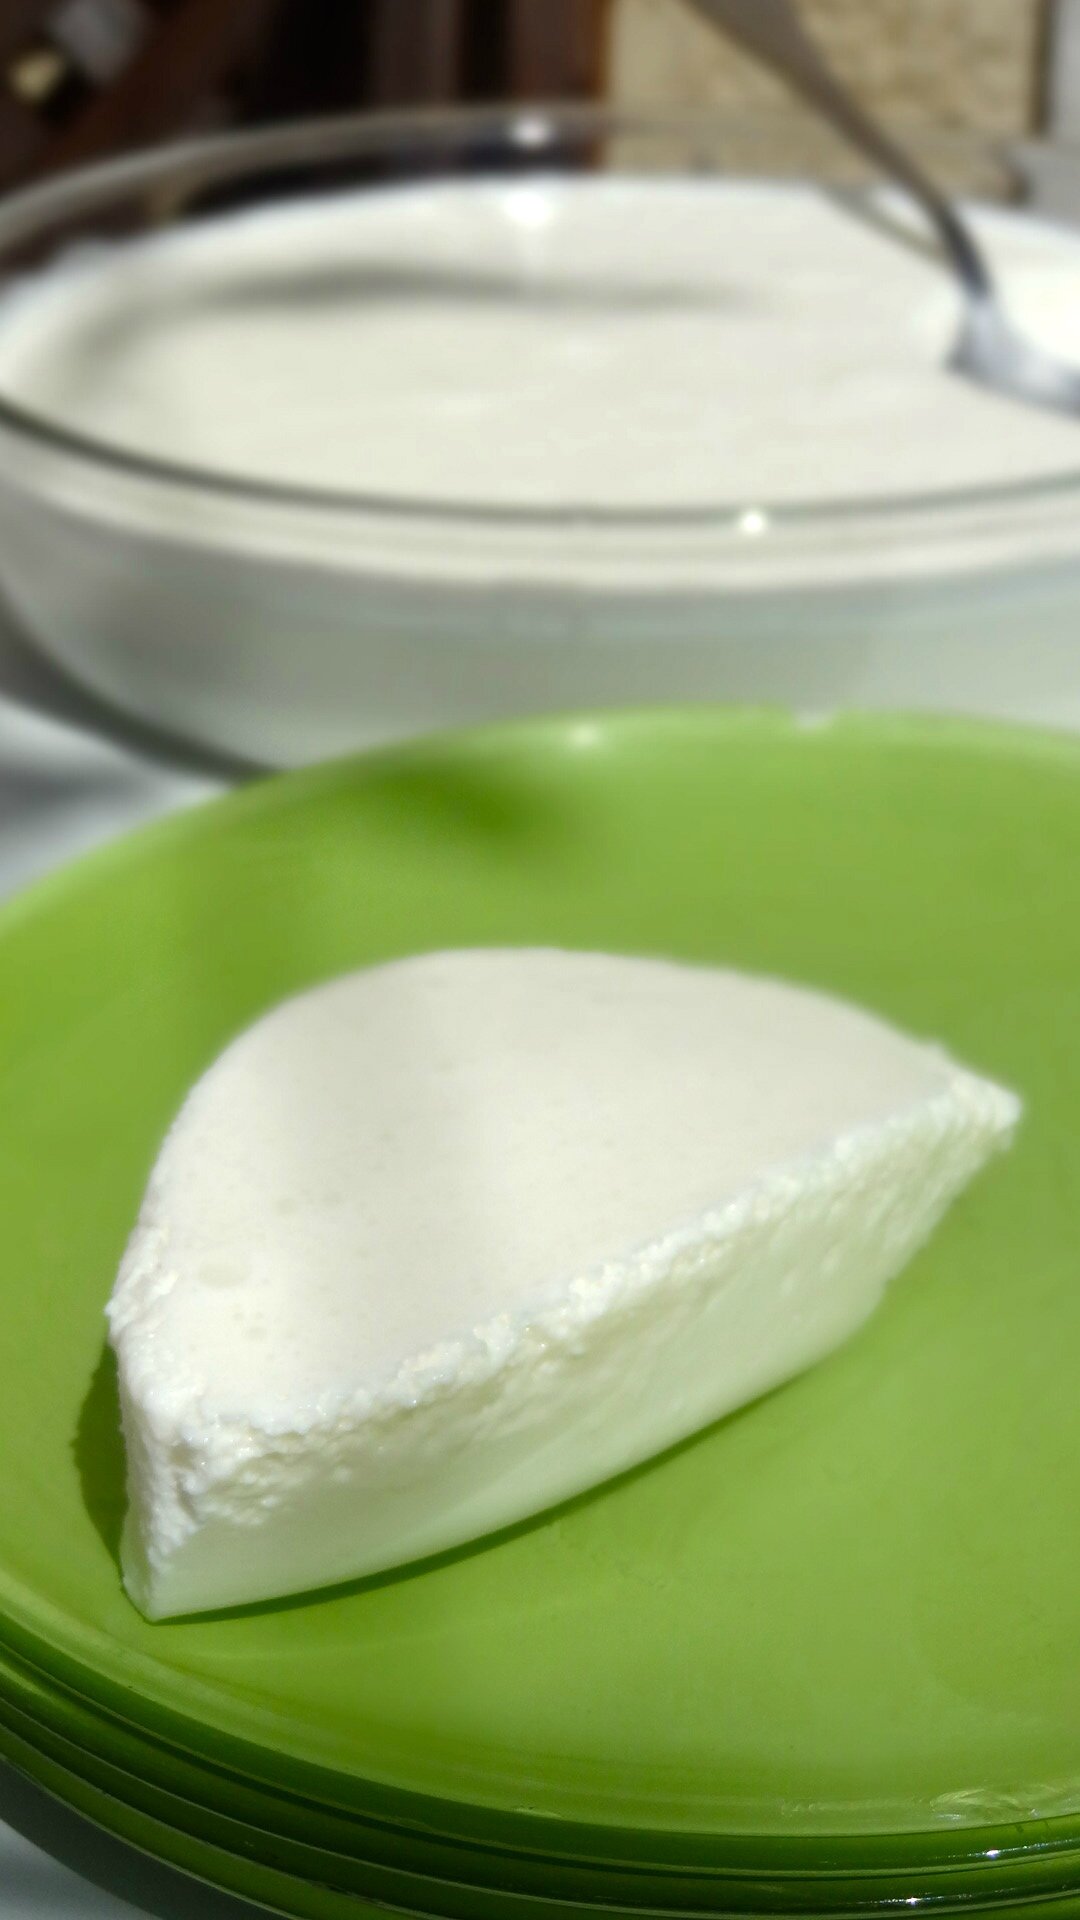 Blanc manger coco : recette gourmande